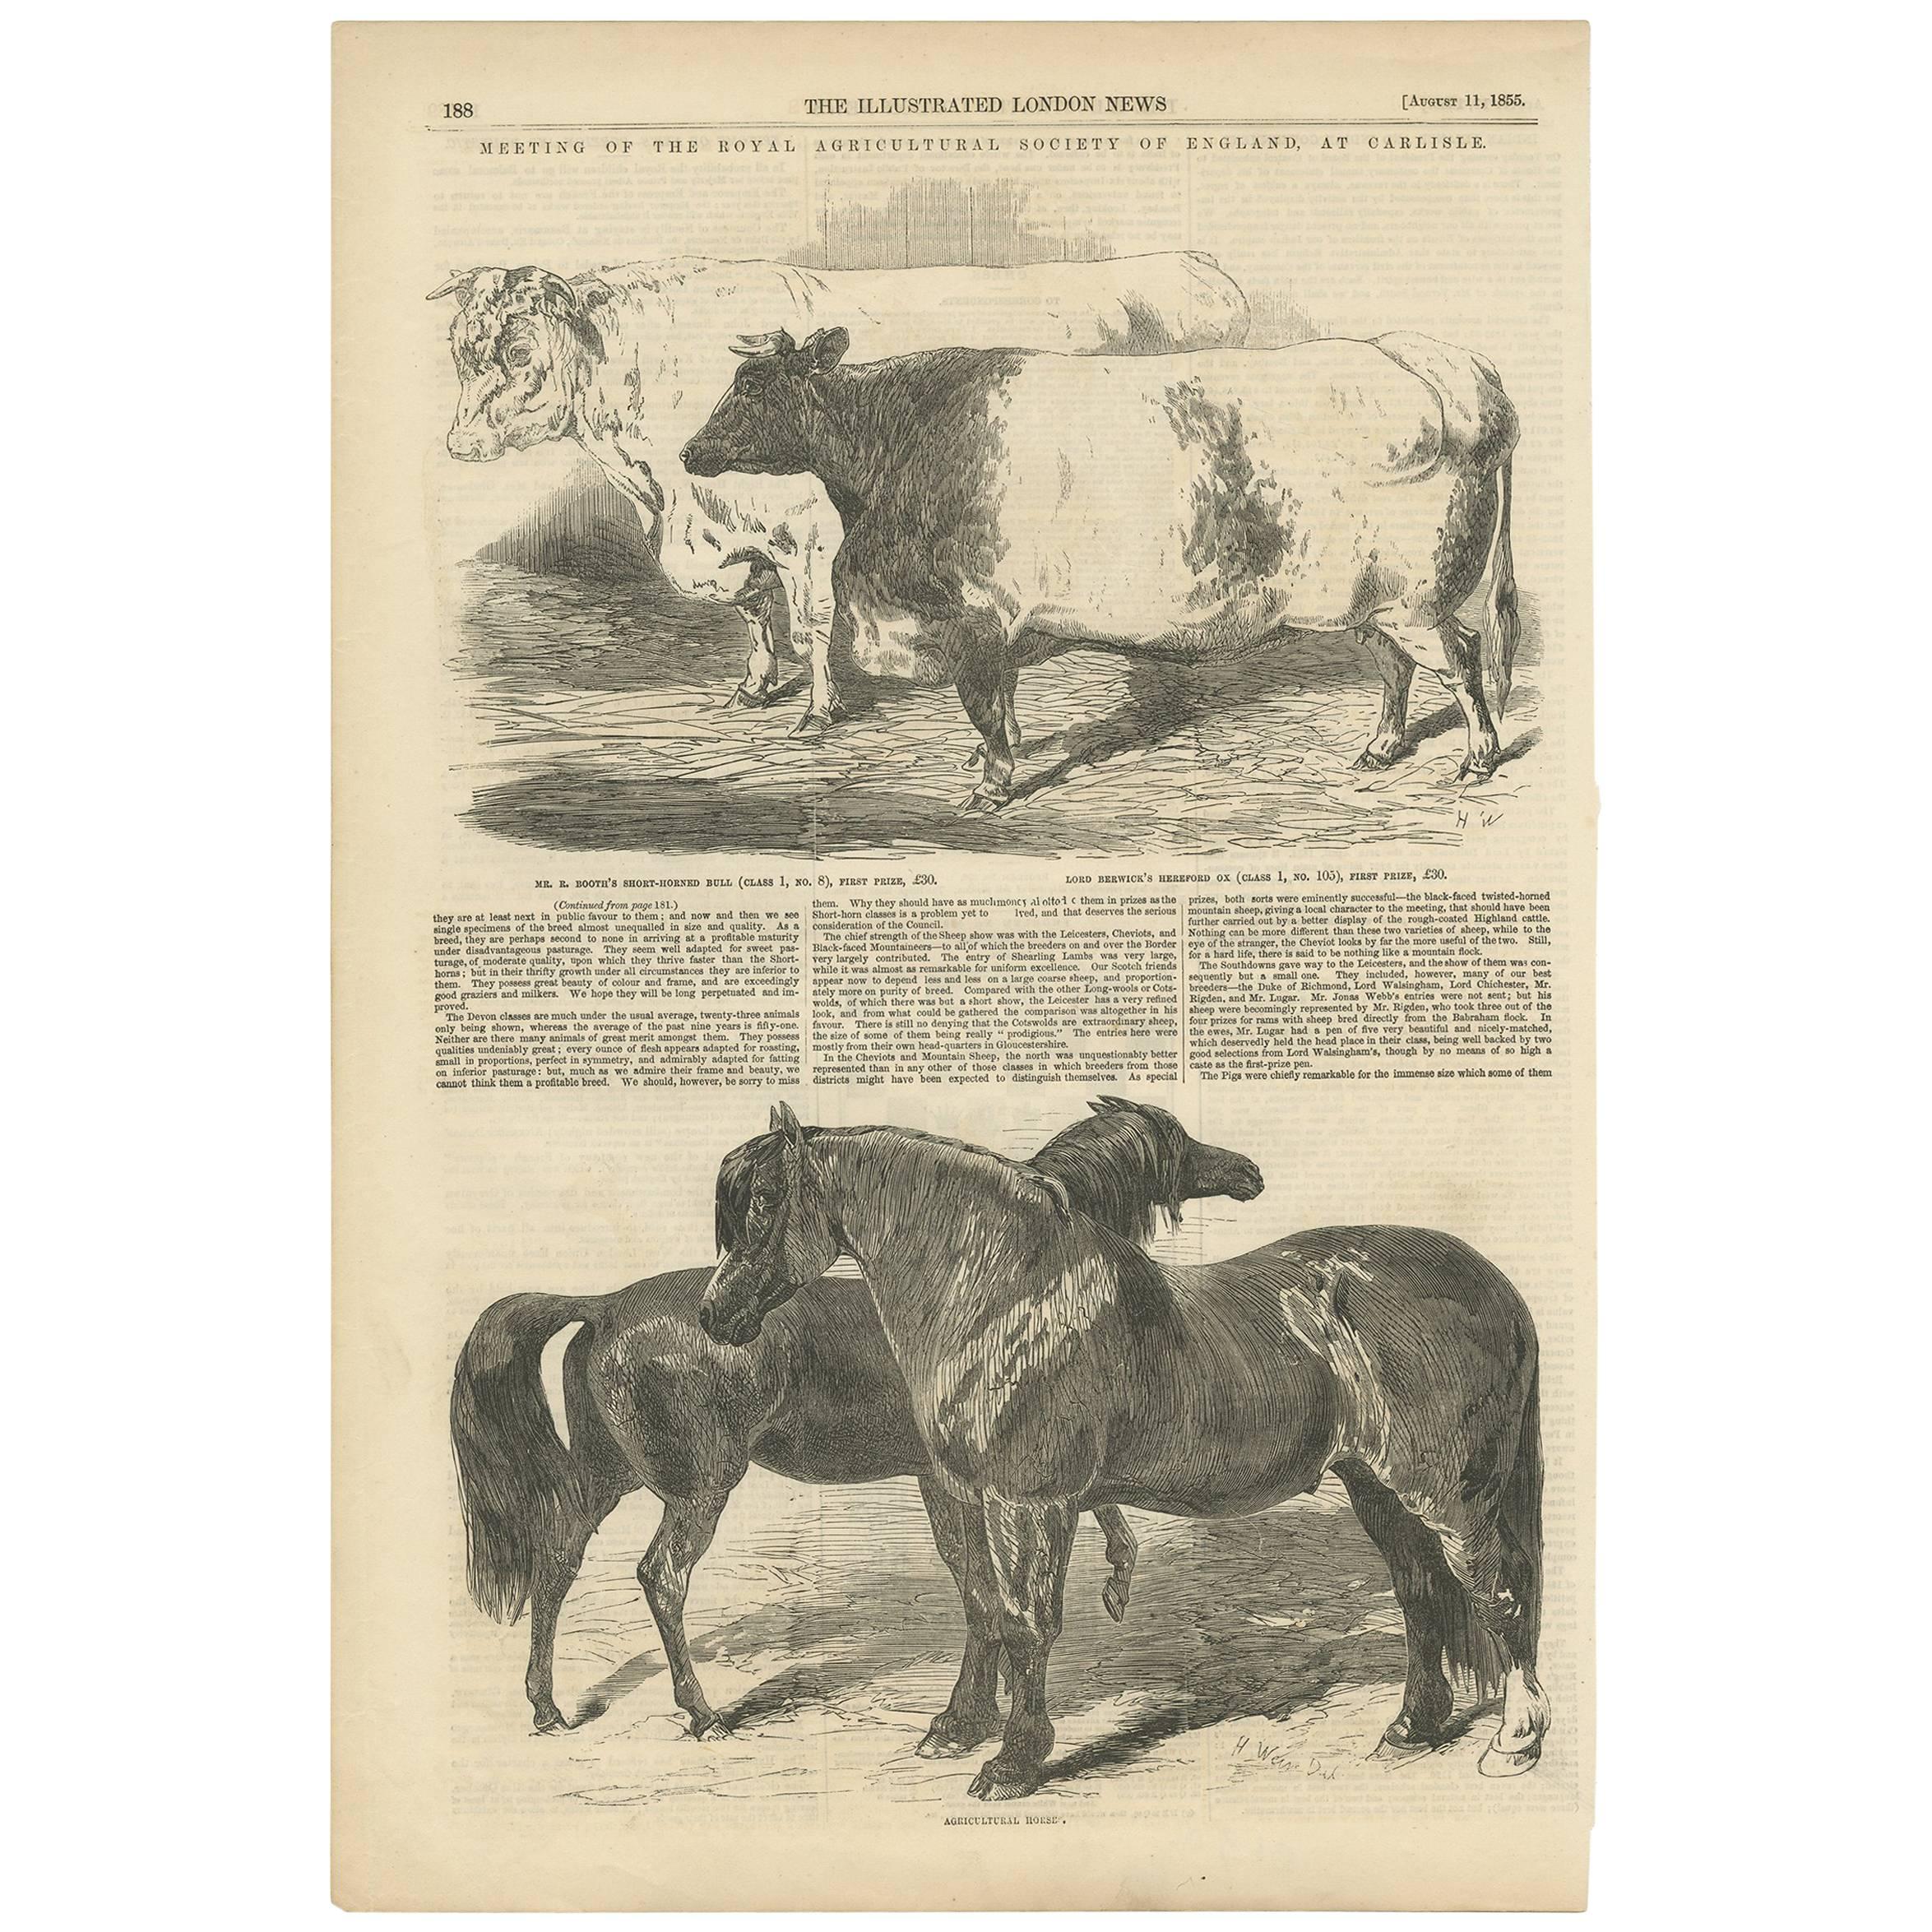 Antique Print of the Royal Agricultural Society of England at Carlisle, 1855